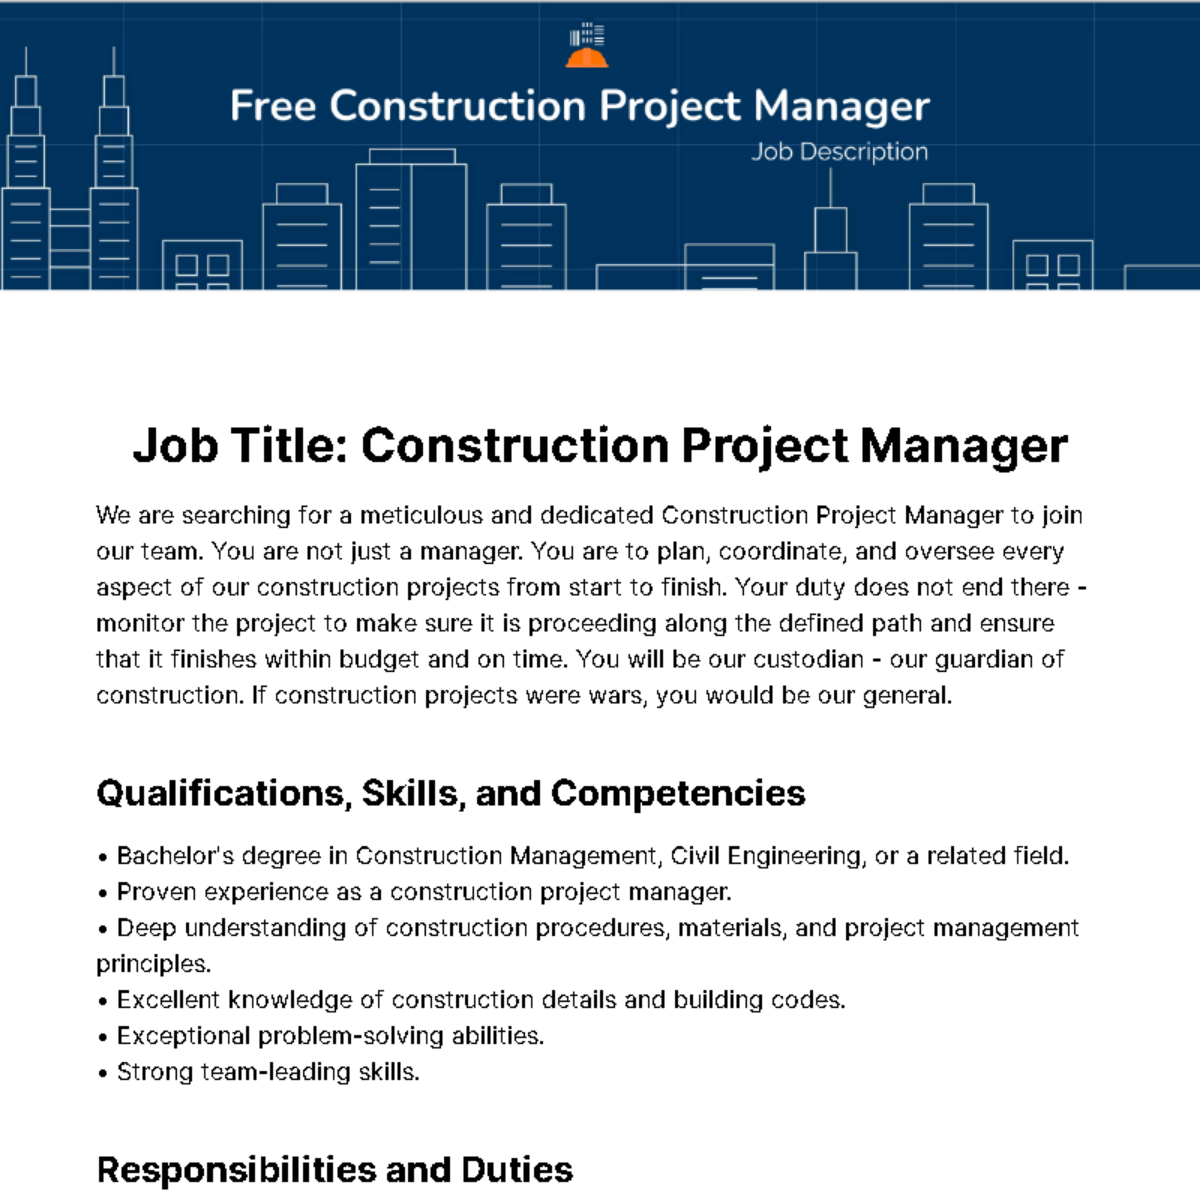 Free Construction Project Manager Job Description Template